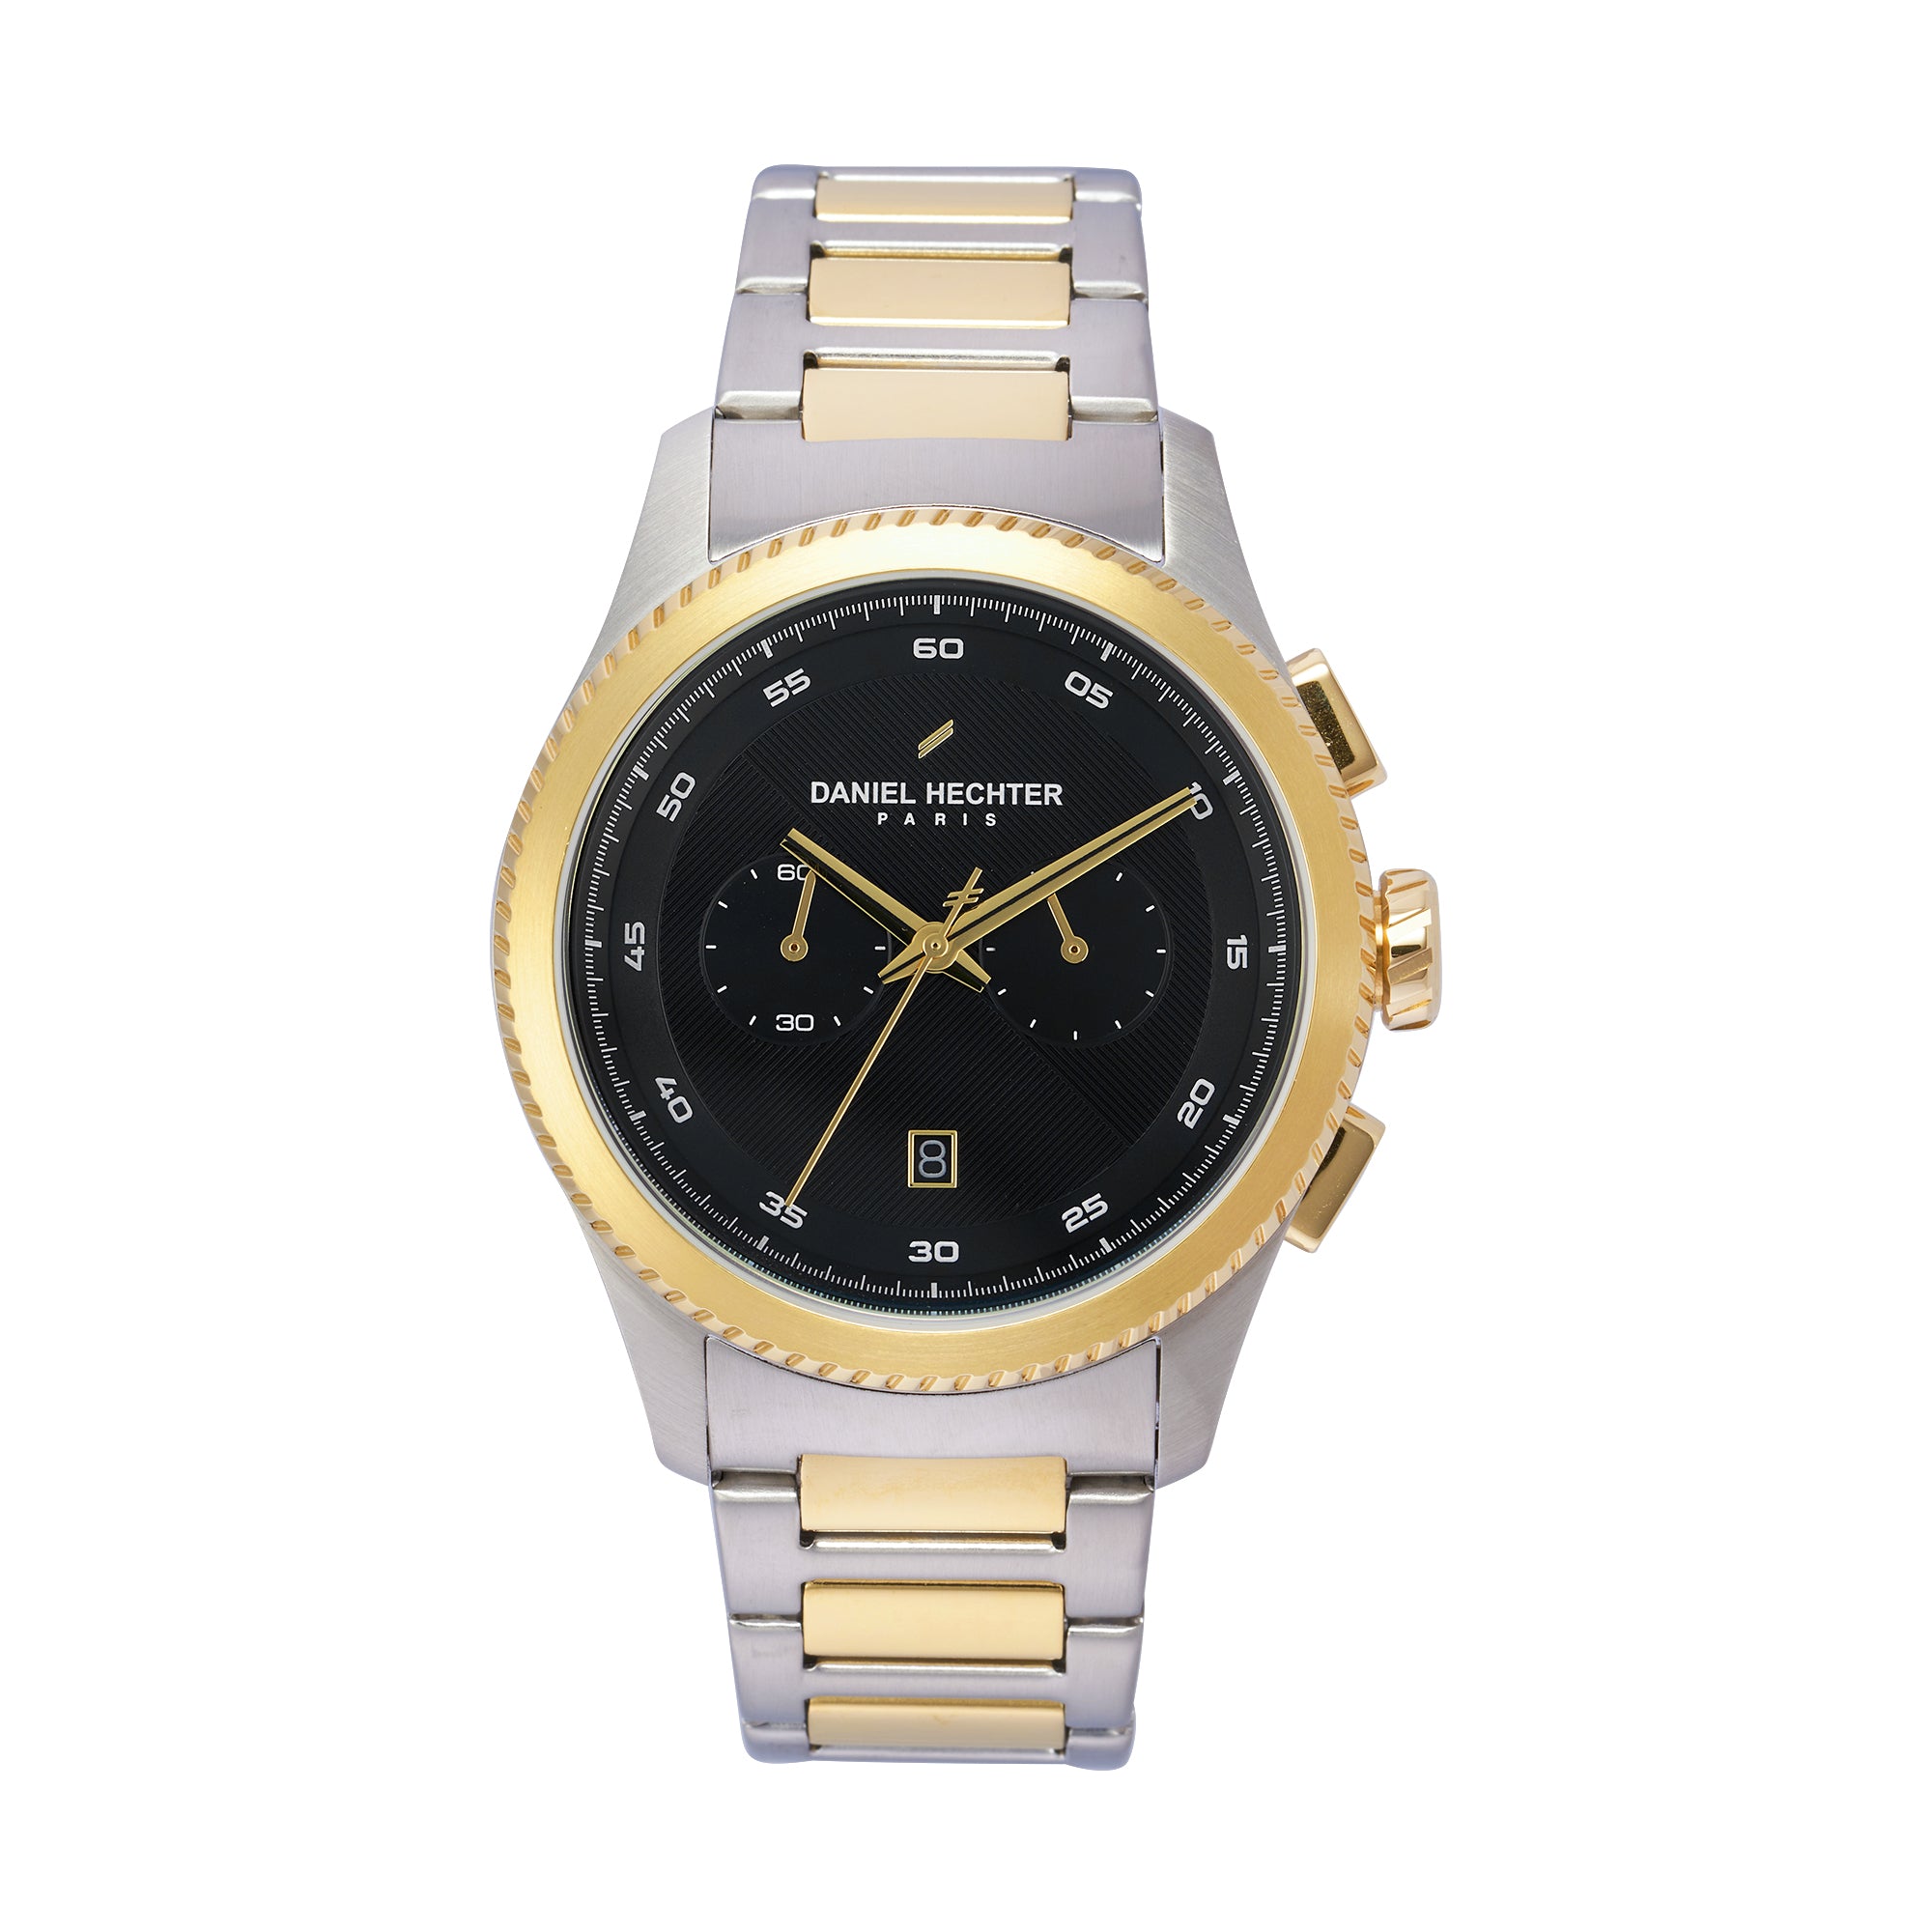 Buy Daniel Hechter Chrono Gold Watch Online